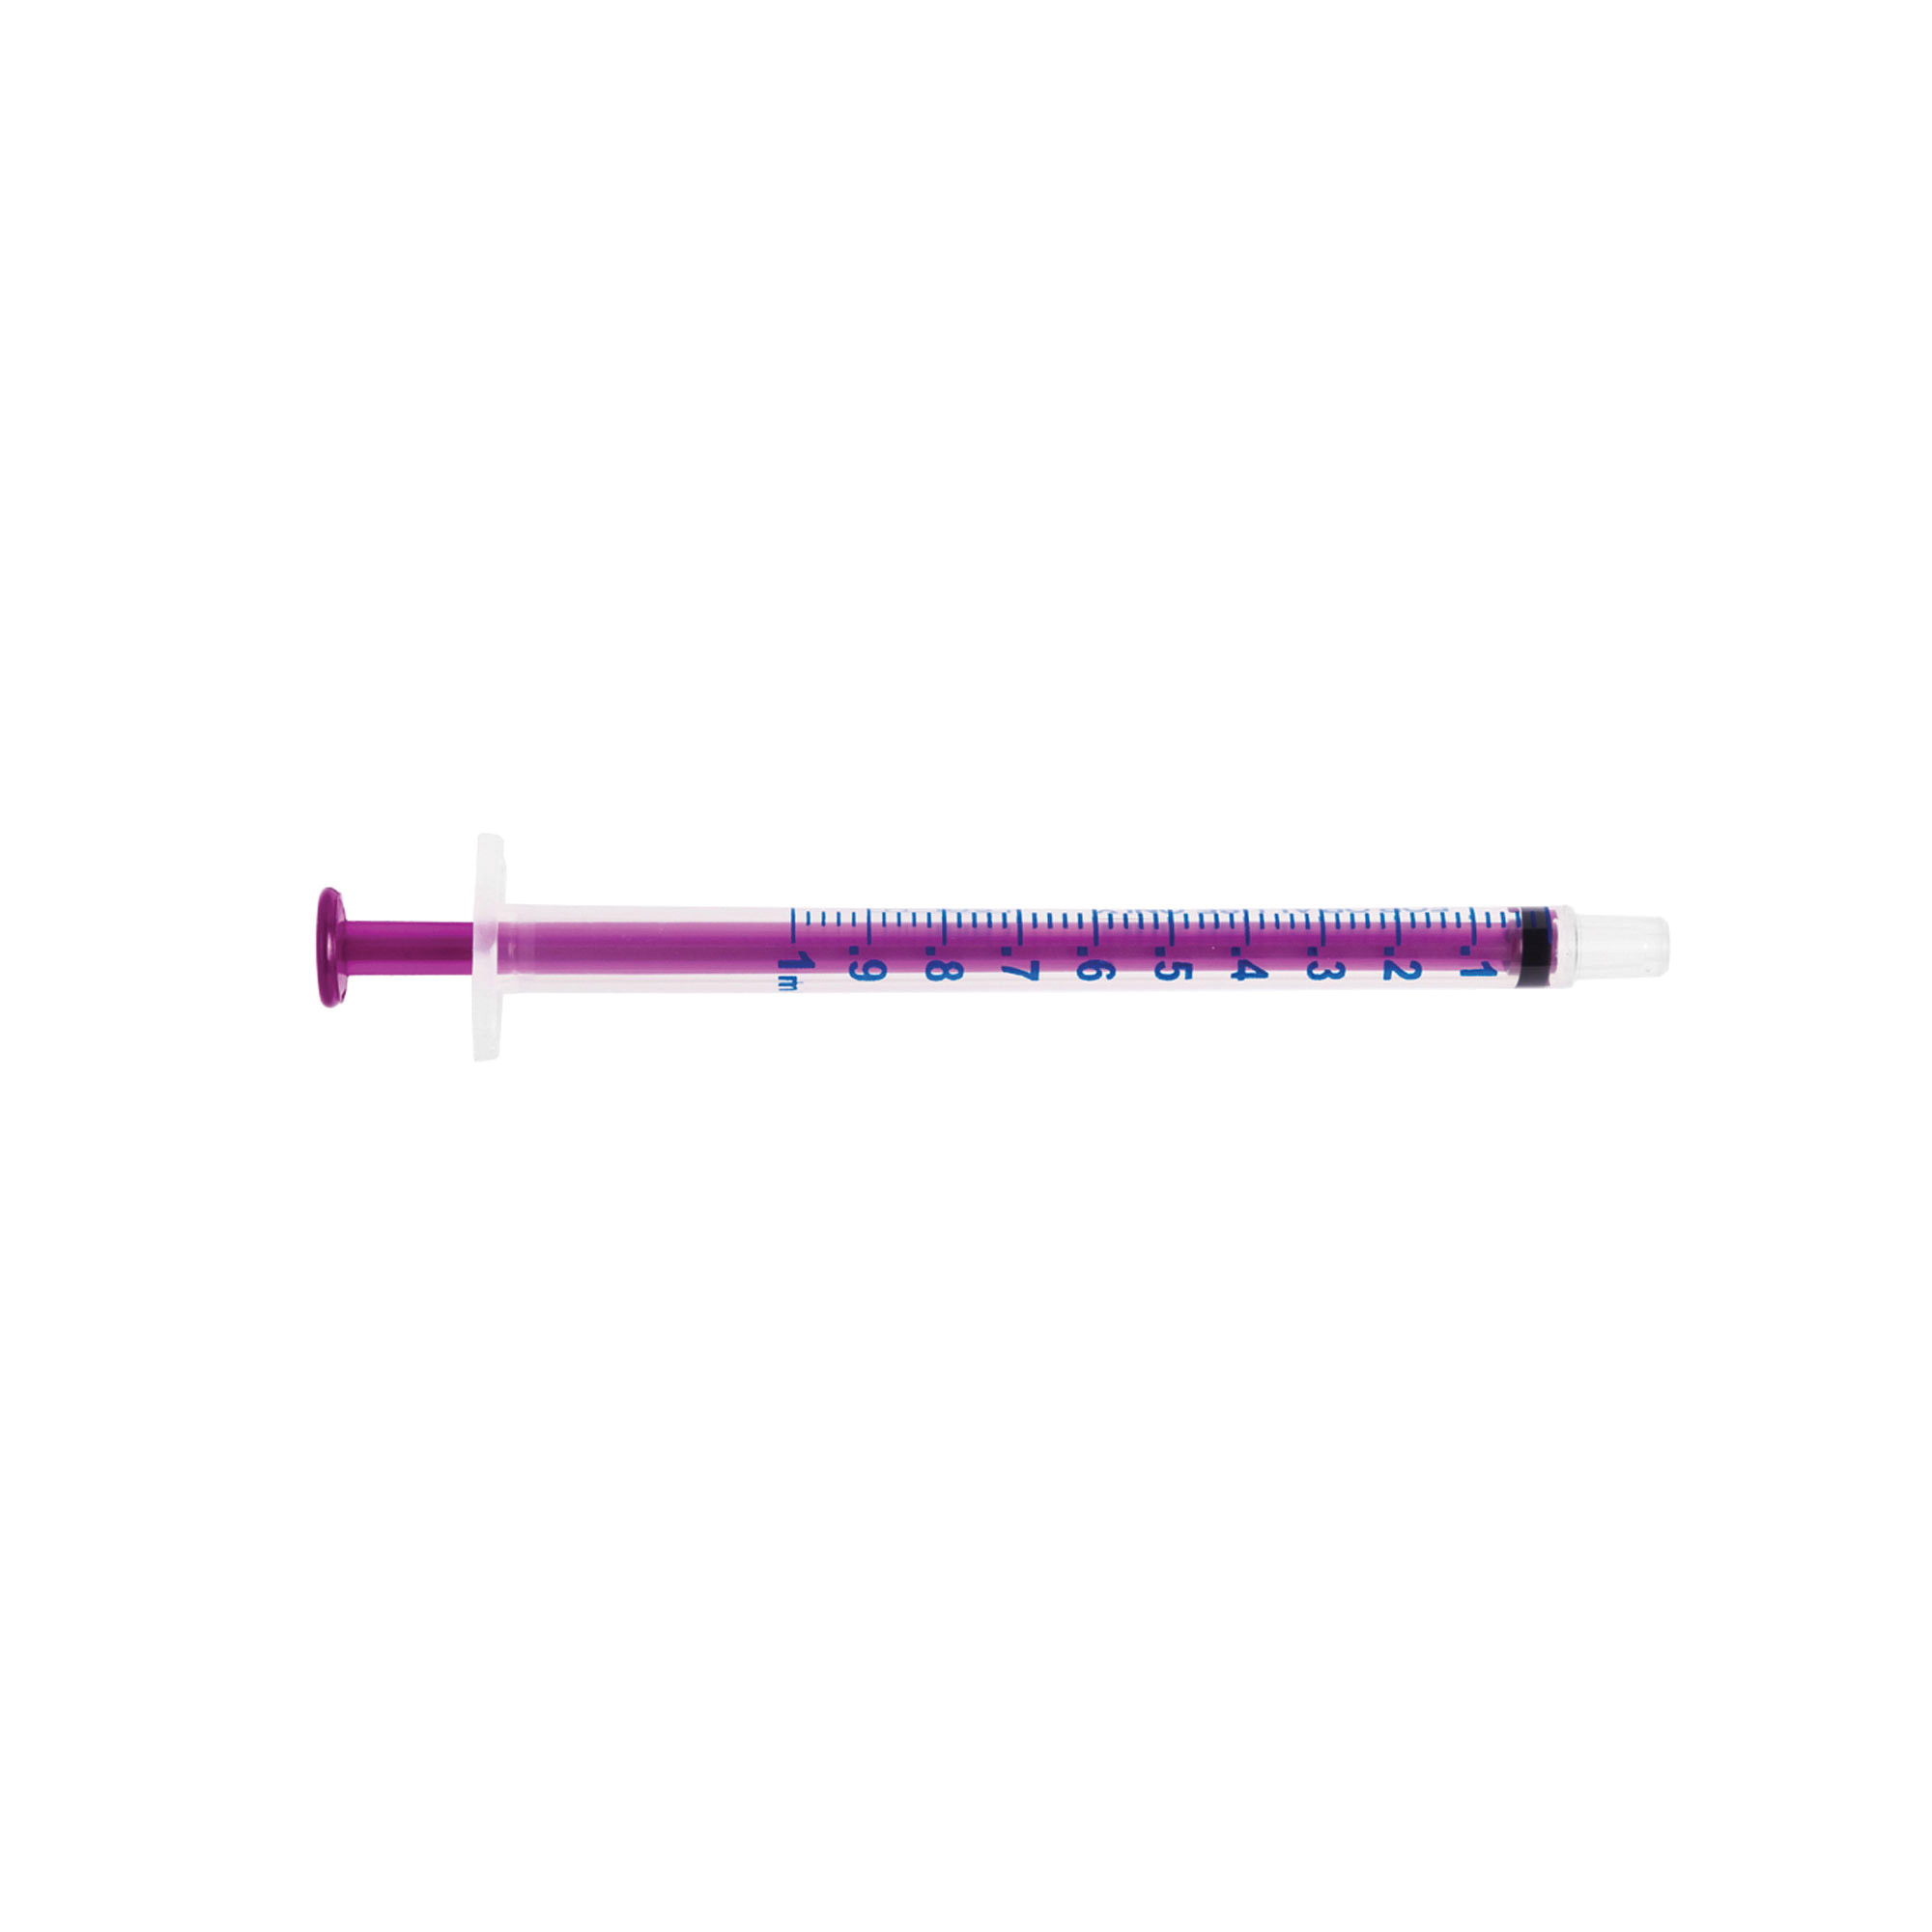 SOL-M Oral syringe (purple plunger) 5ml - Box of 100